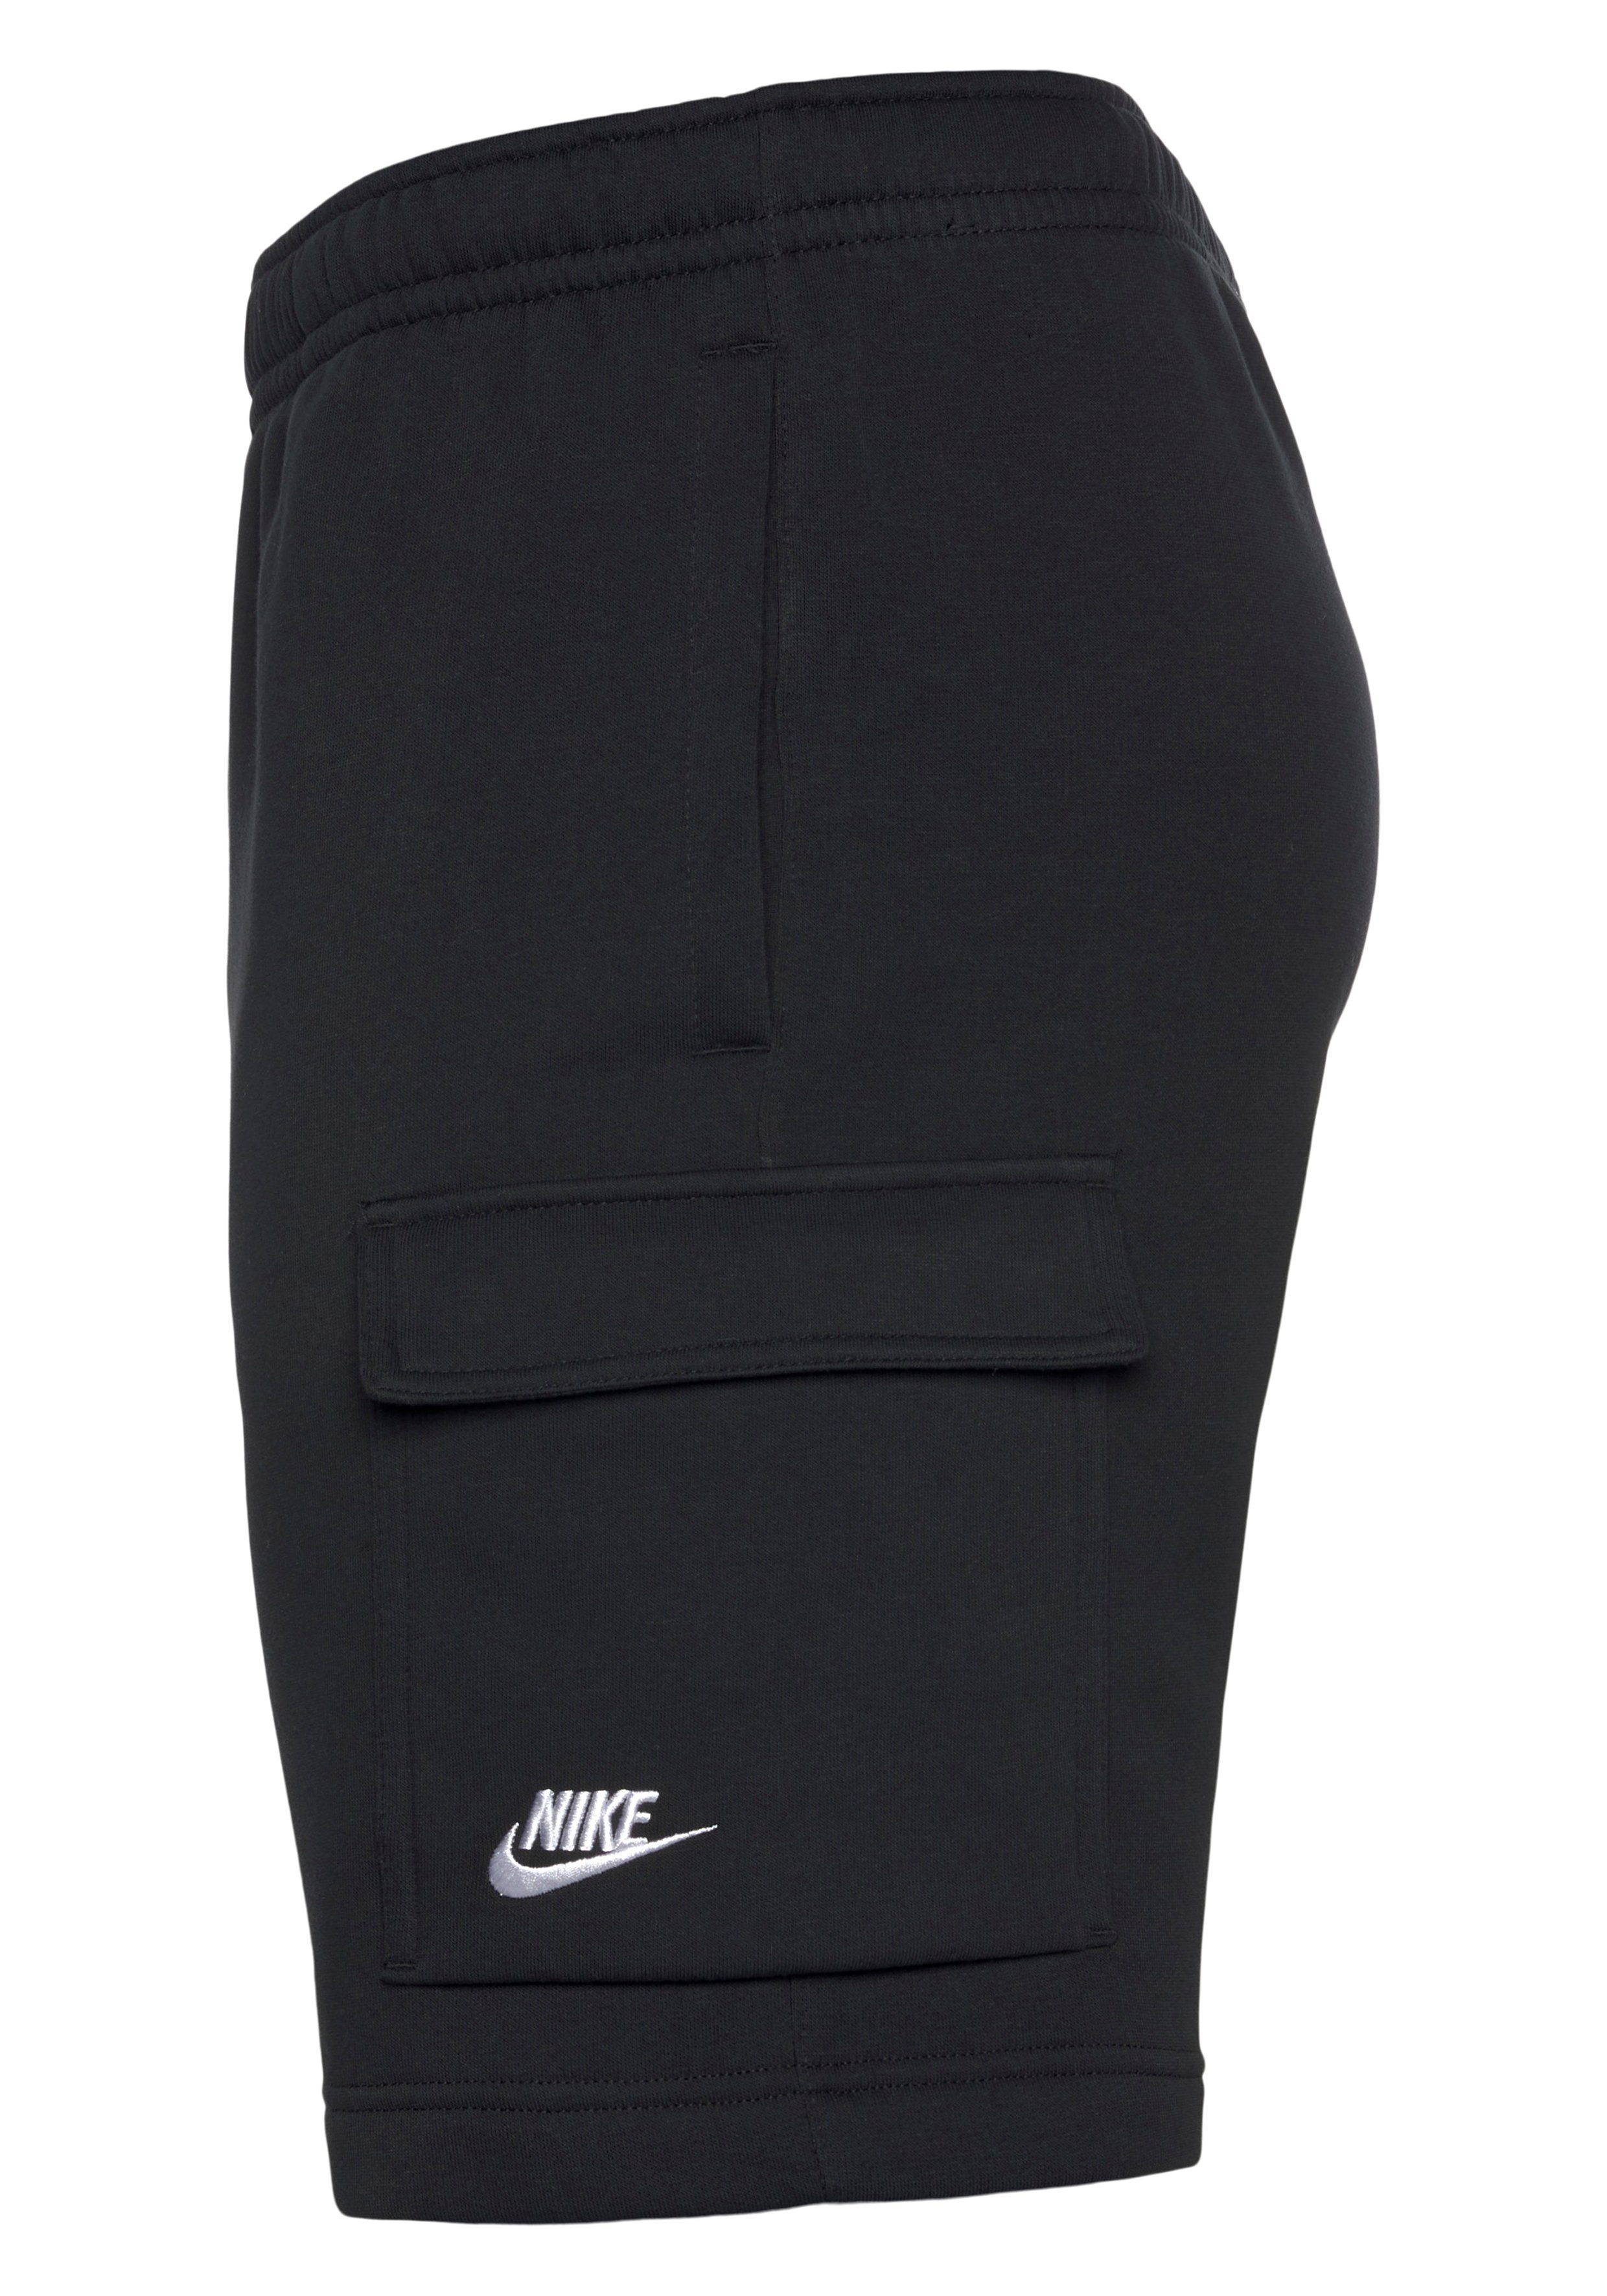 Nike Club Sportswear Shorts Shorts Men's schwarz Cargo